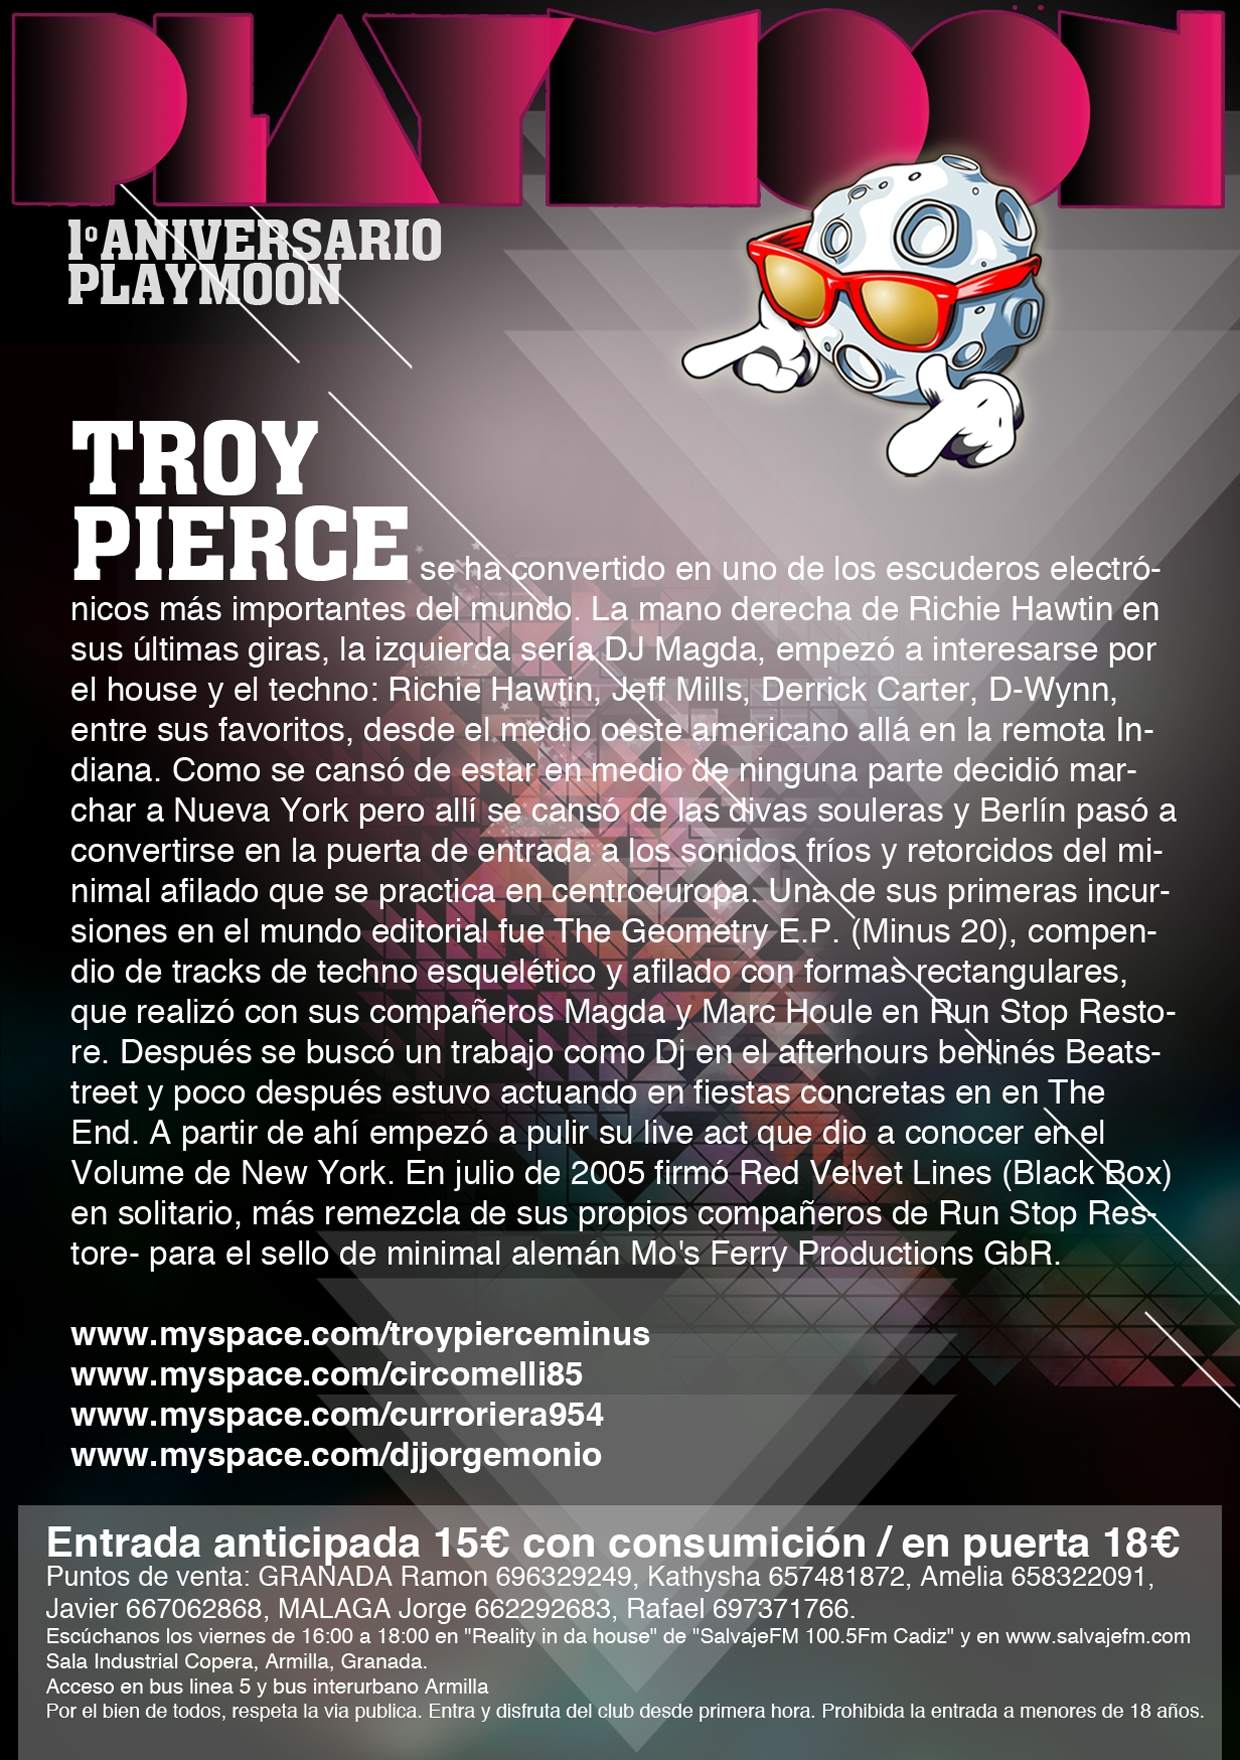 Troy Pierce at 1º Aniversario Playmoon - Página trasera